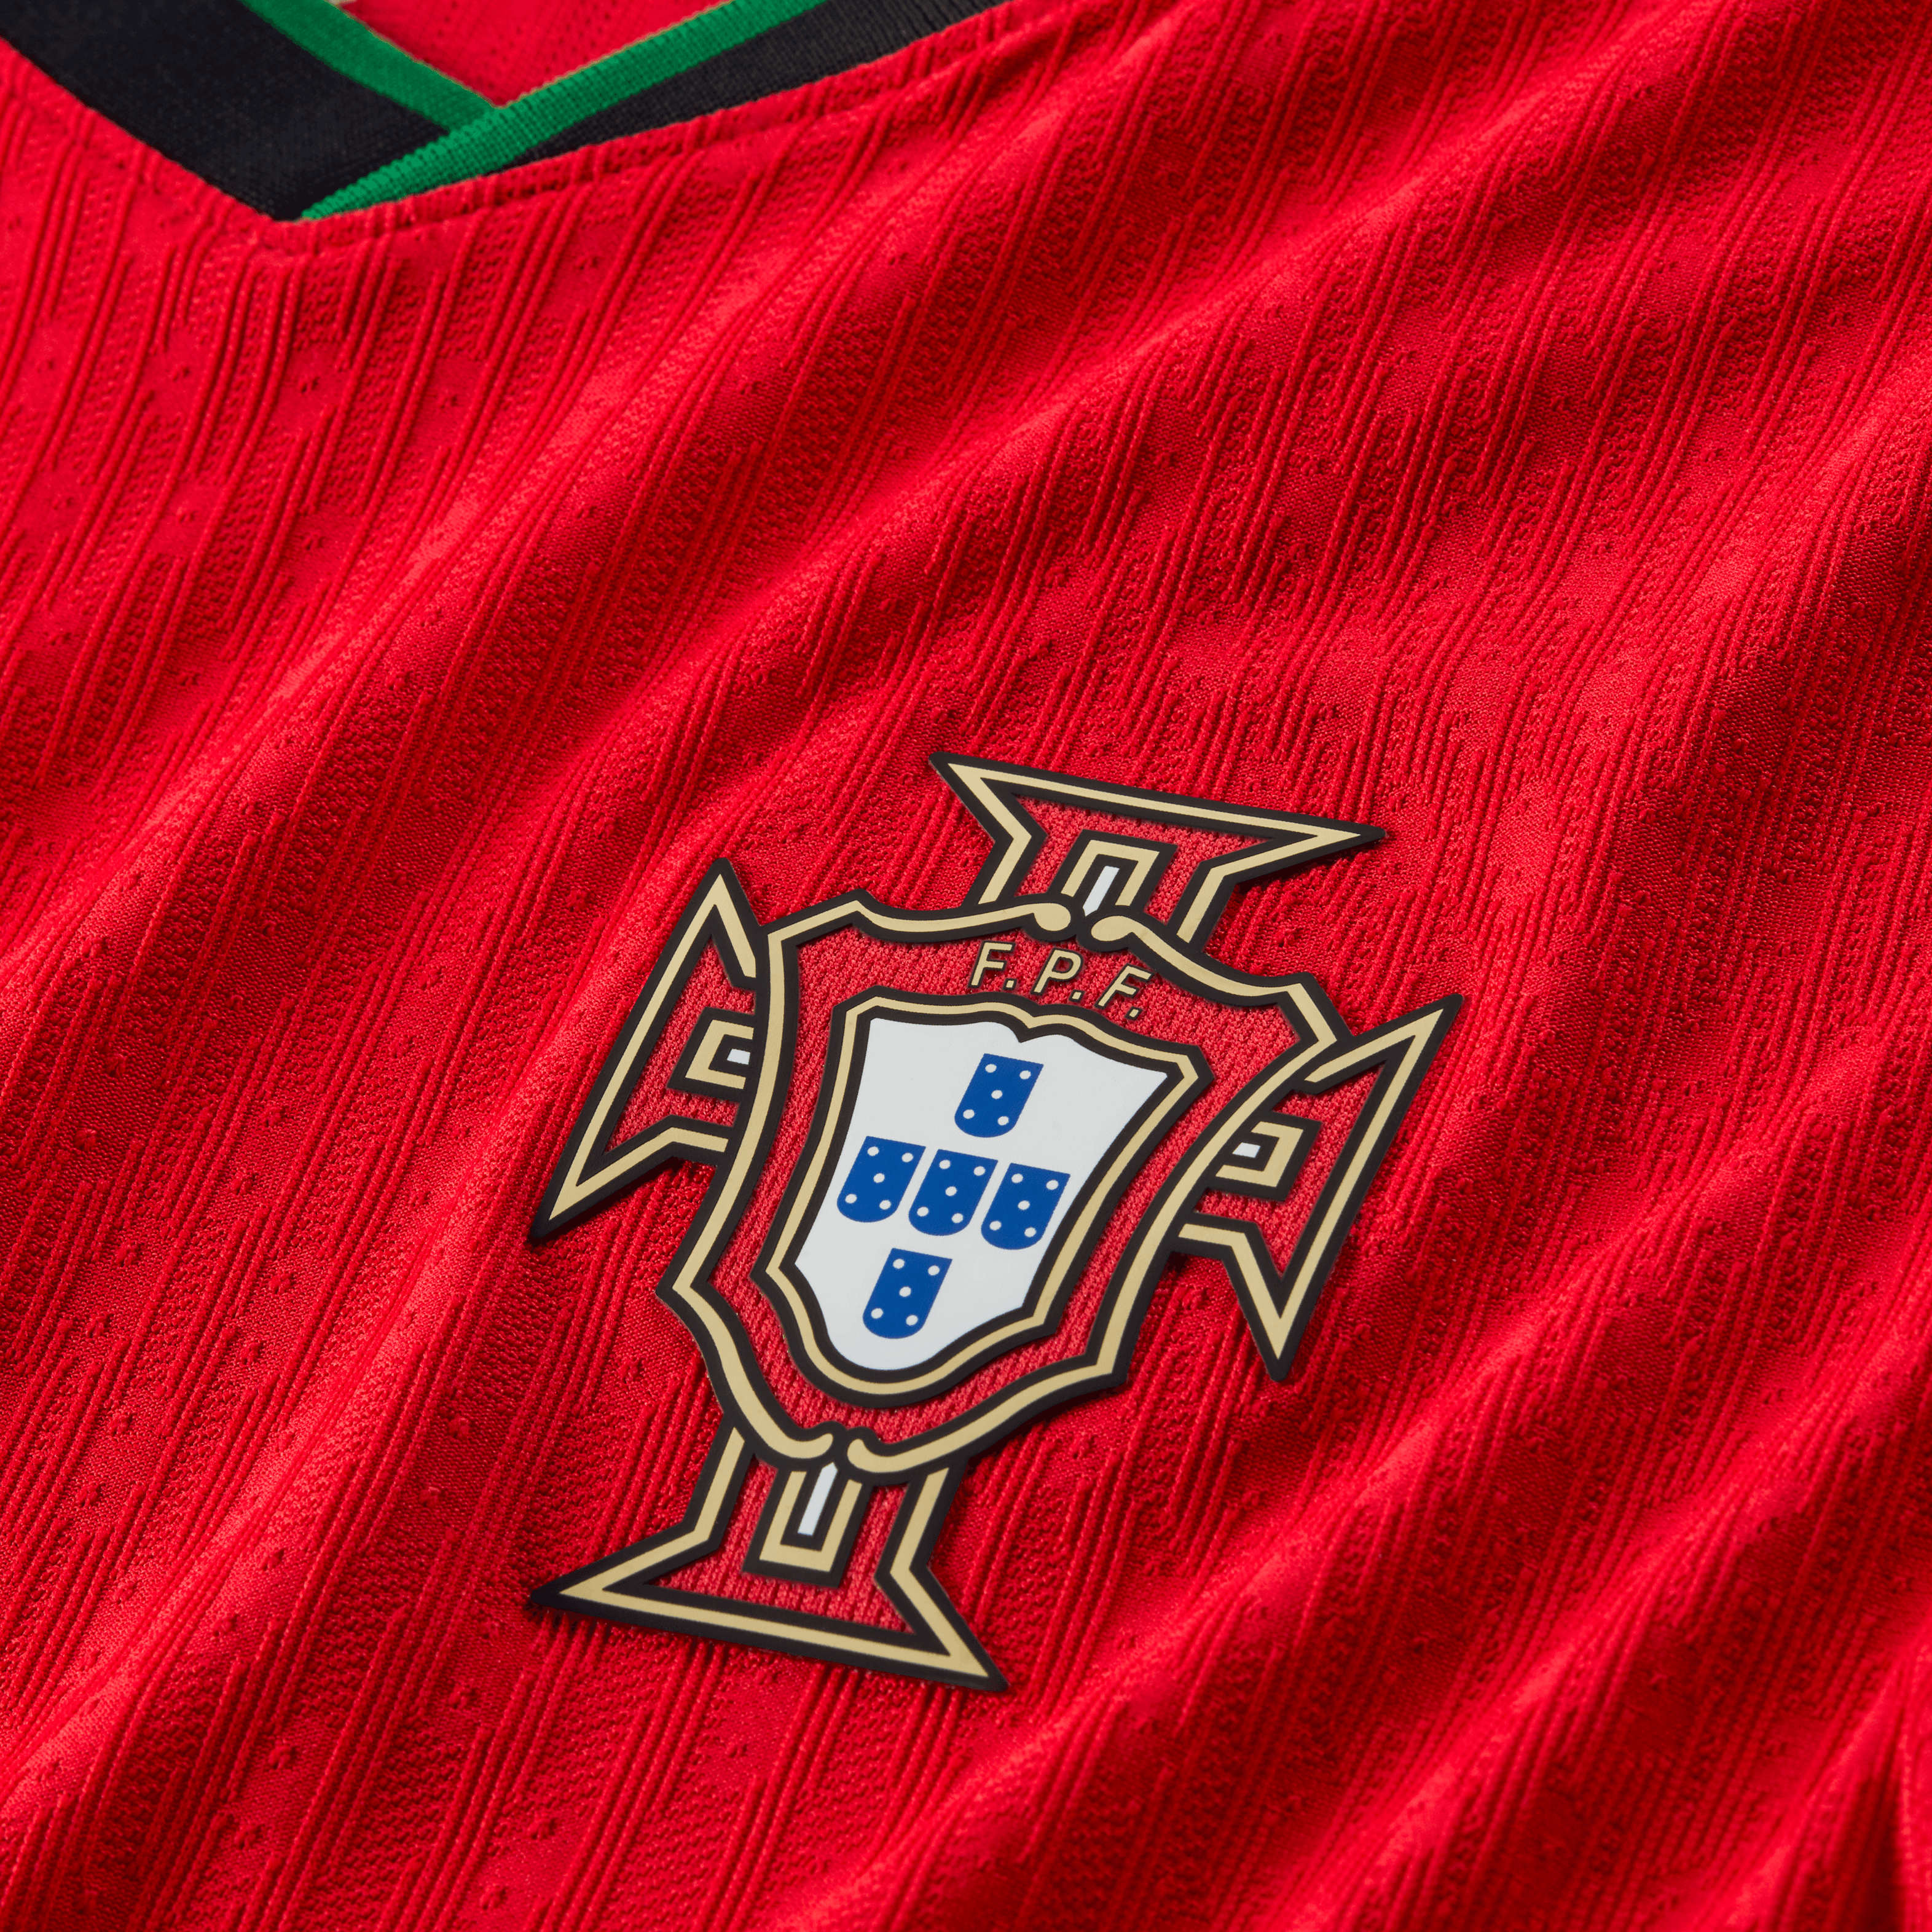 Nike Men's Portugal (Men's Team) Match Home Dri-FIT ADV Soccer Authentic Jersey 24/25